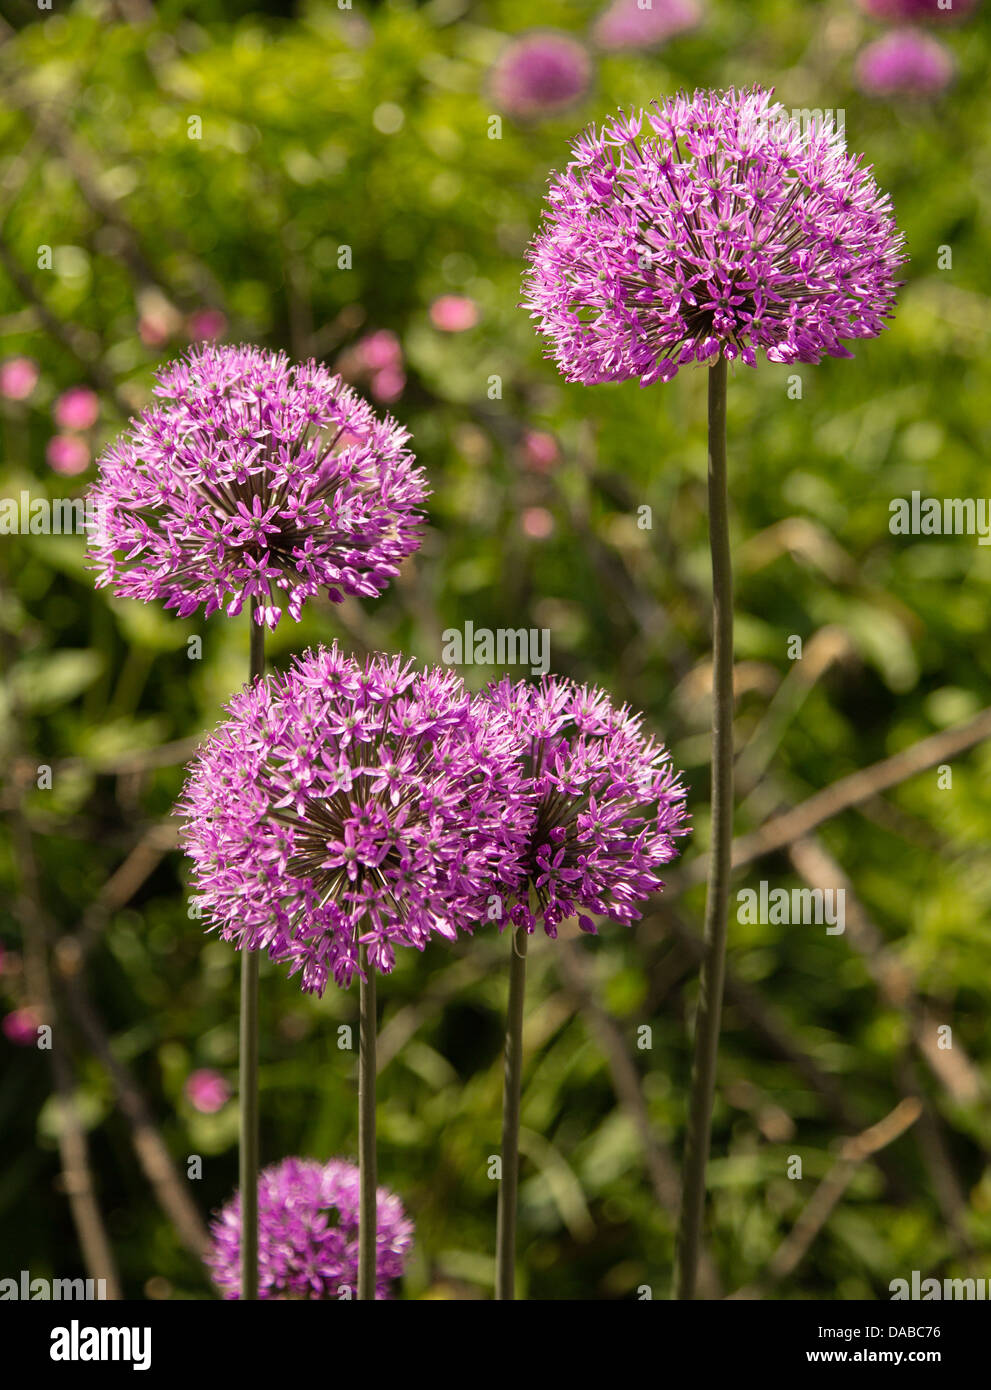 Purple Allium flower heads in an herbaceous border of an English garden Stock Photo